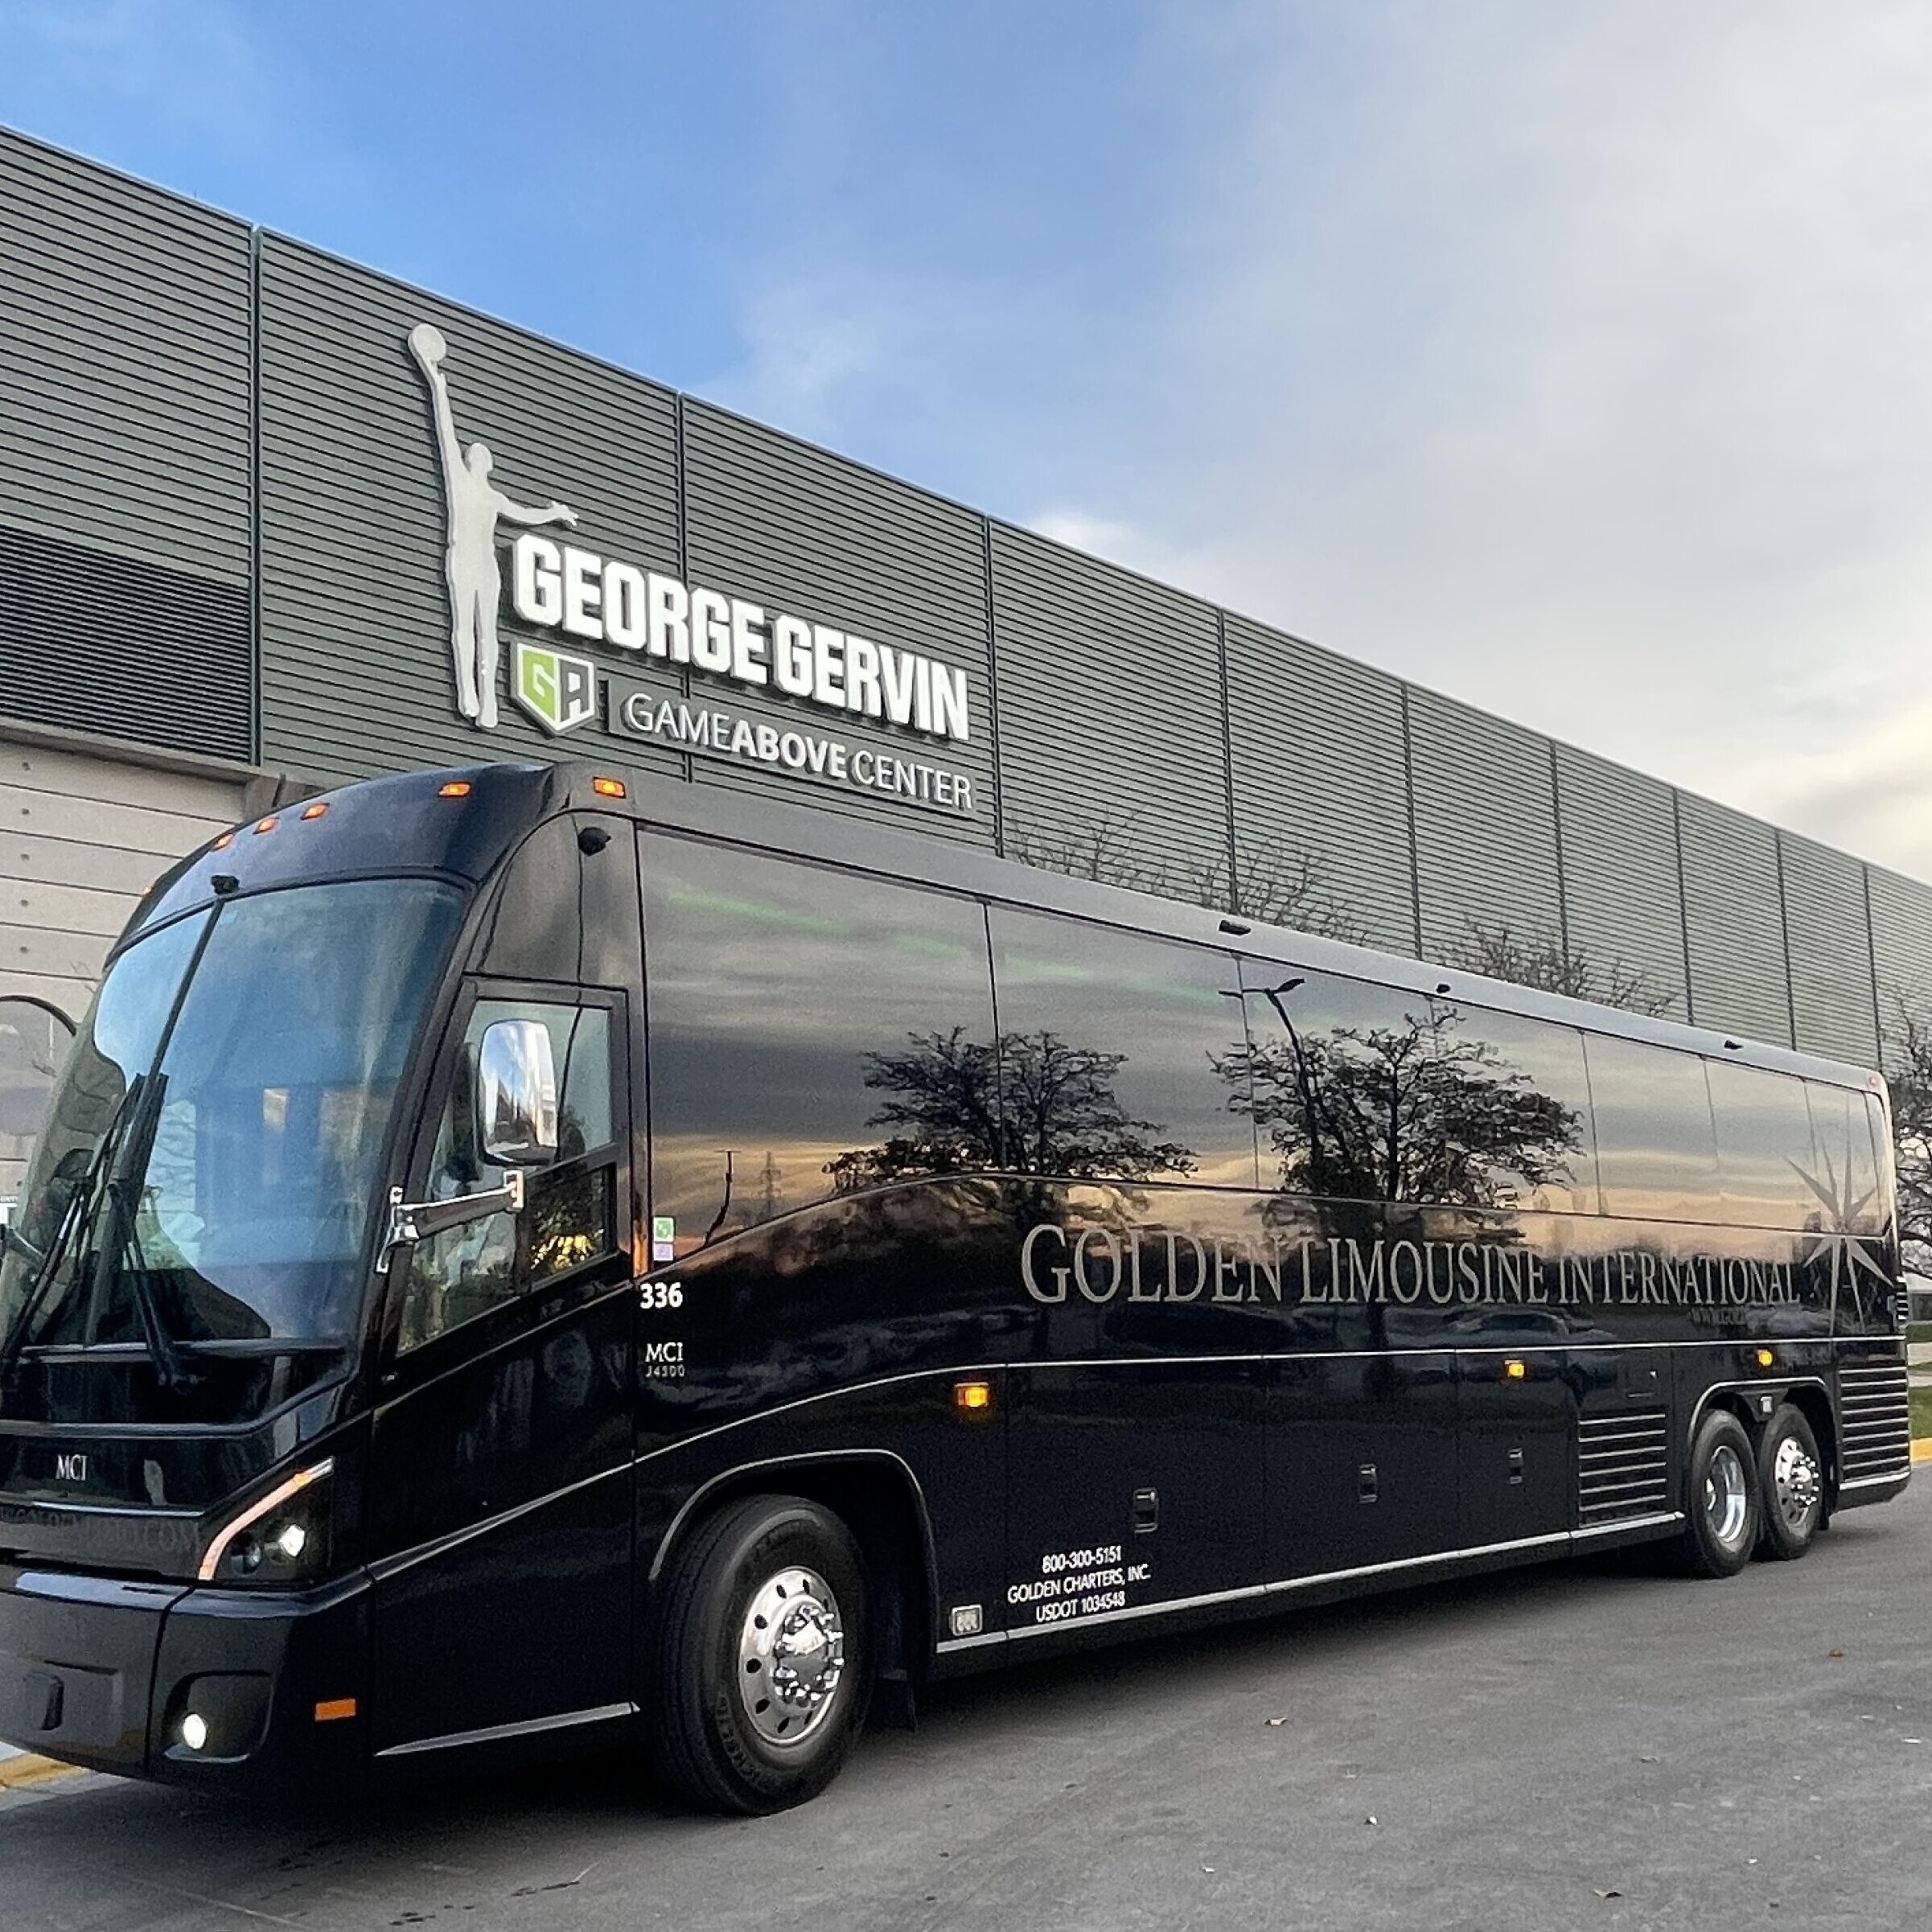 Exterior image of Golden Limo Charter Bus parked outside EMU'S George Gervin GameAbove Center